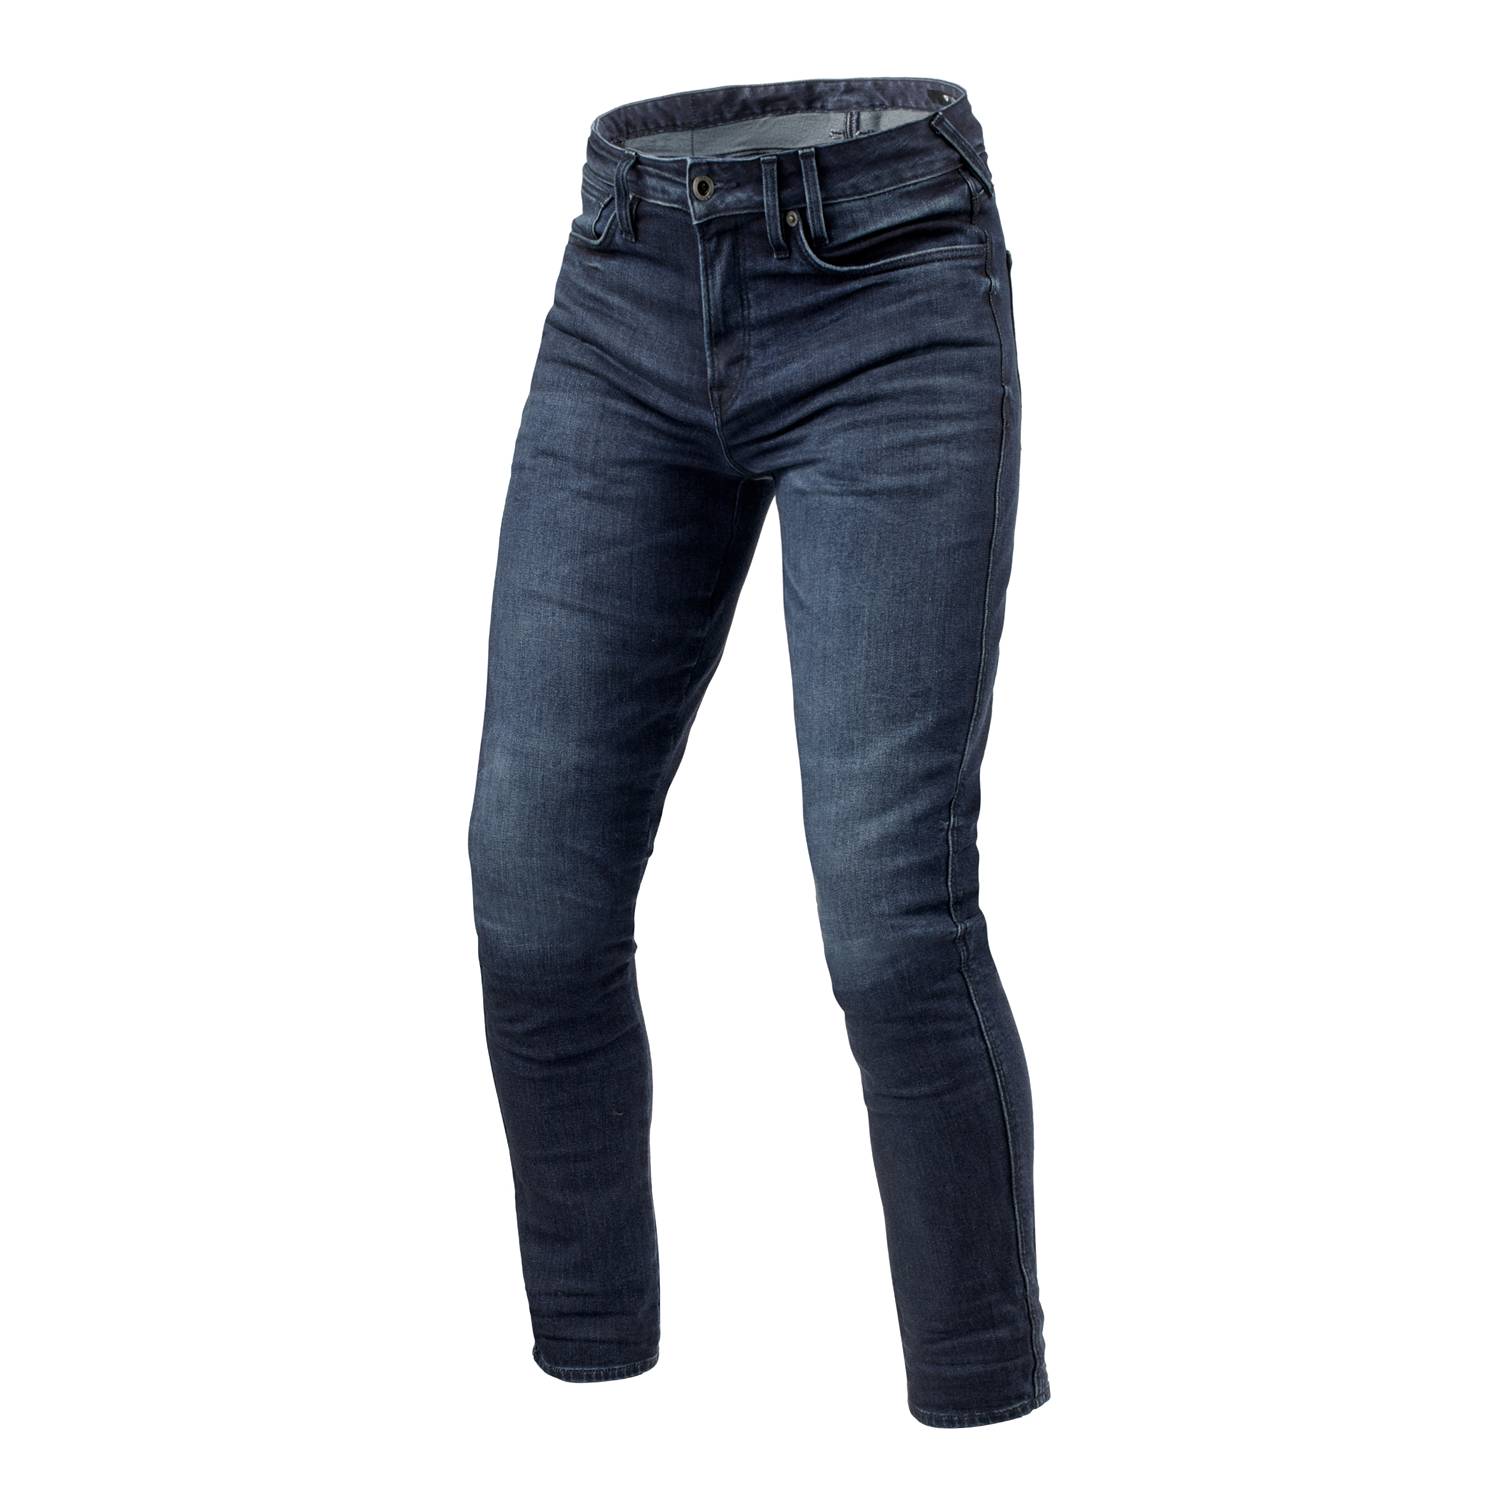 Image of REV'IT! Jeans Carlin SK Dark Blue Used L34 Motorcycle Jeans Talla L34/W34